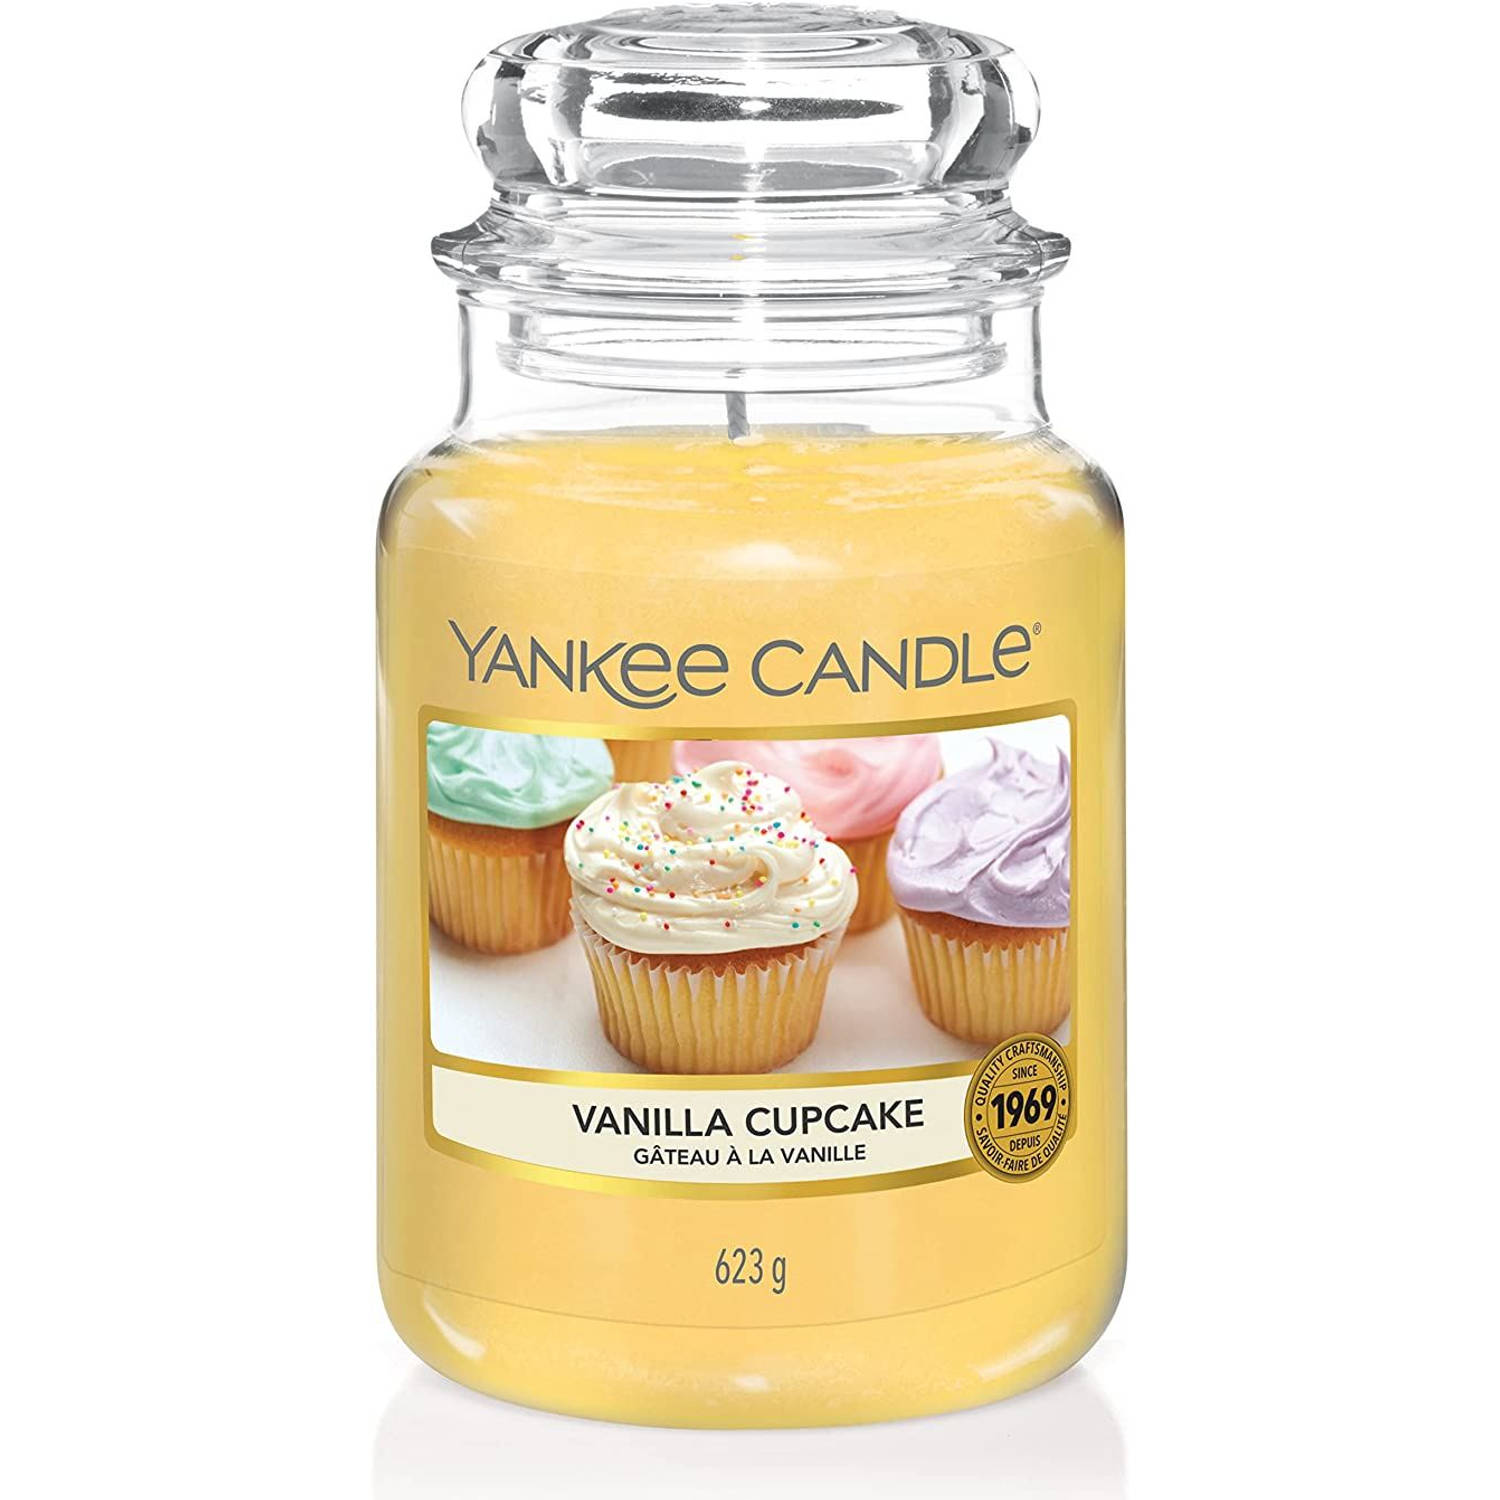 Yankee Candle - Vanilla Cupcake geurkaars - Large Jar - Tot 150 branduren